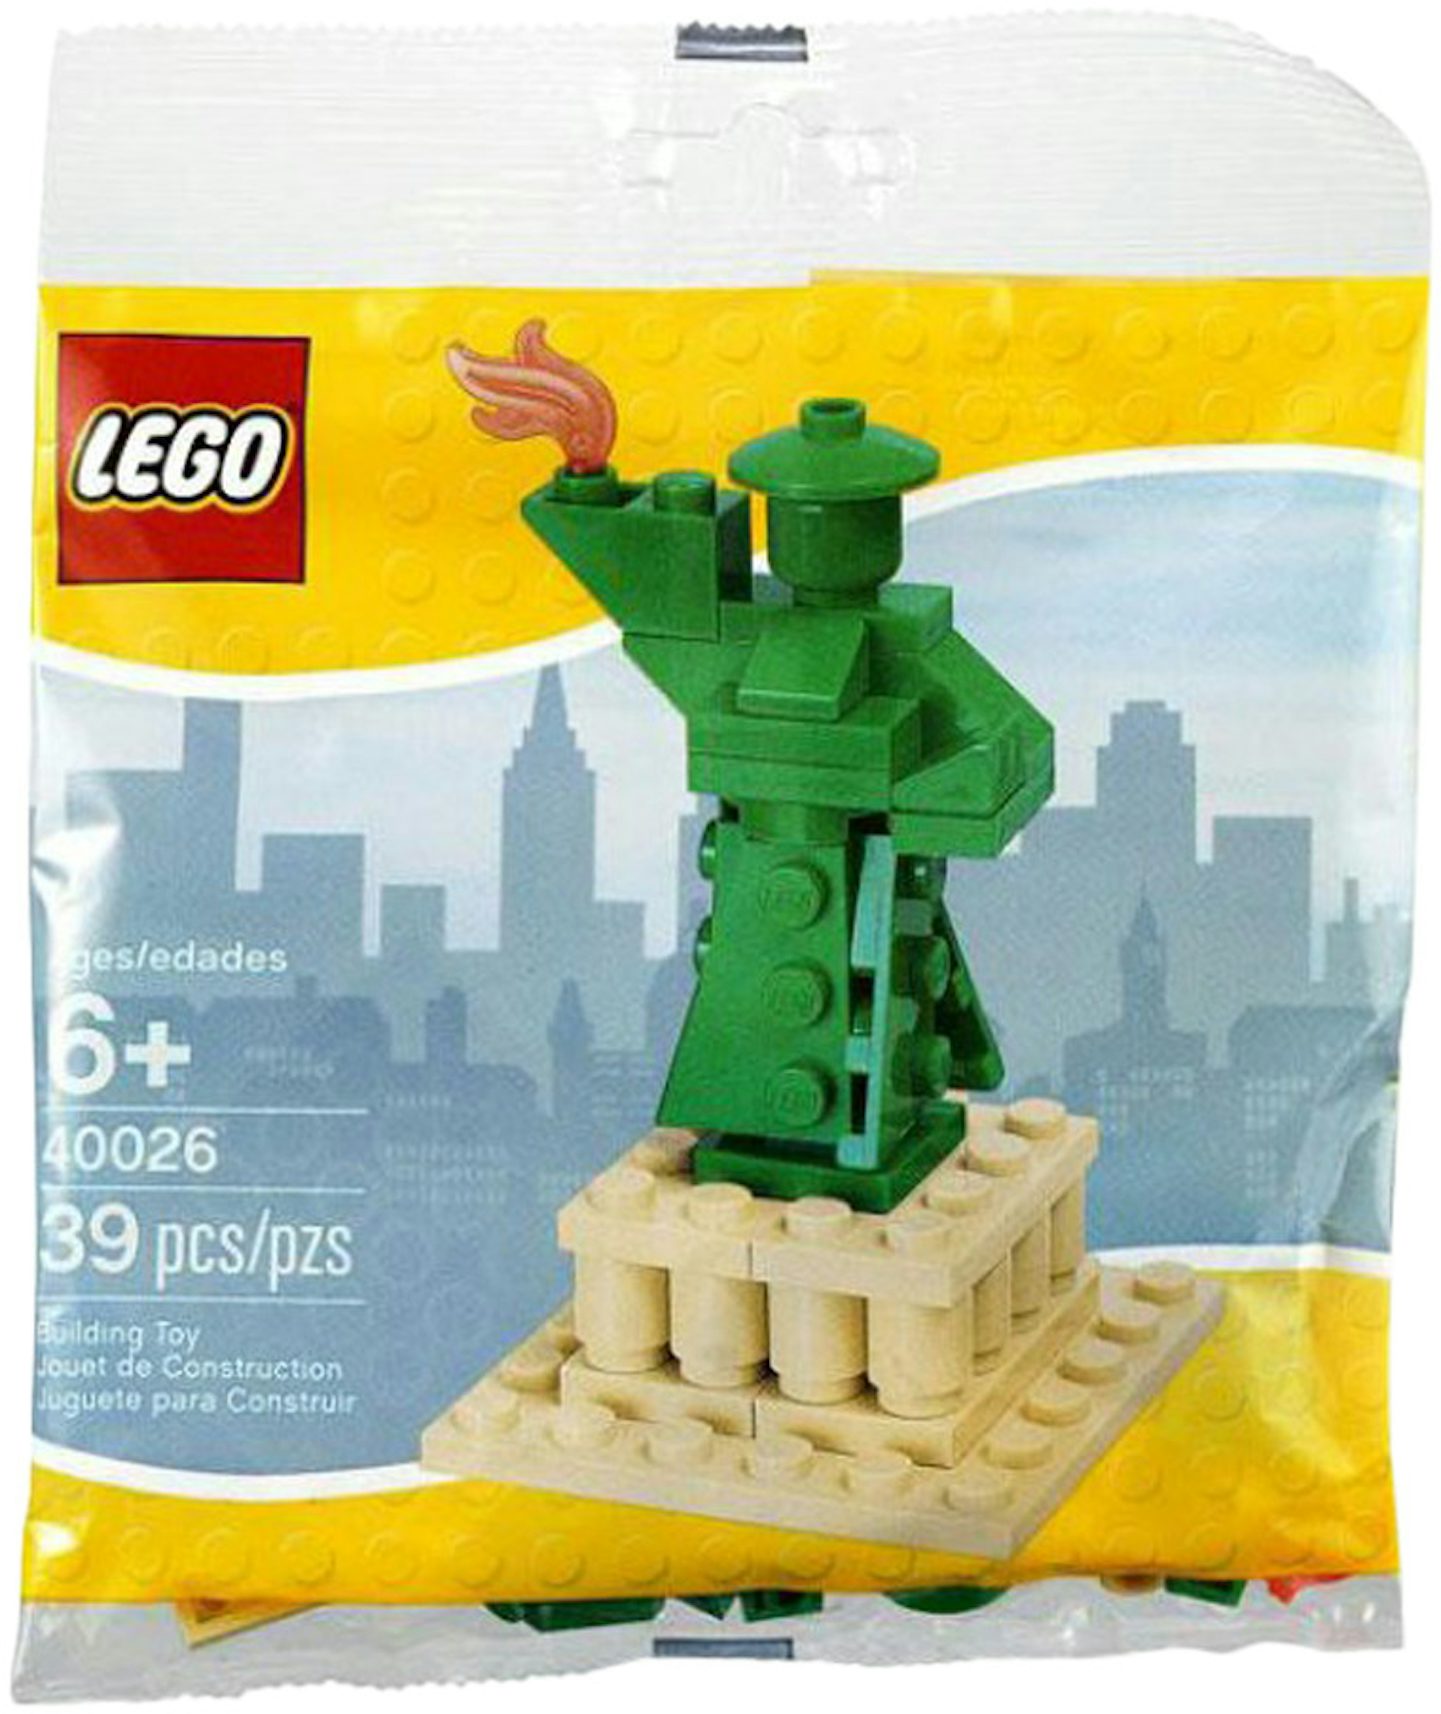 https://images.stockx.com/images/LEGO-Statue-of-Liberty-Set-40026.jpg?fit=fill&bg=FFFFFF&w=1200&h=857&fm=jpg&auto=compress&dpr=2&trim=color&updated_at=1647885126&q=60